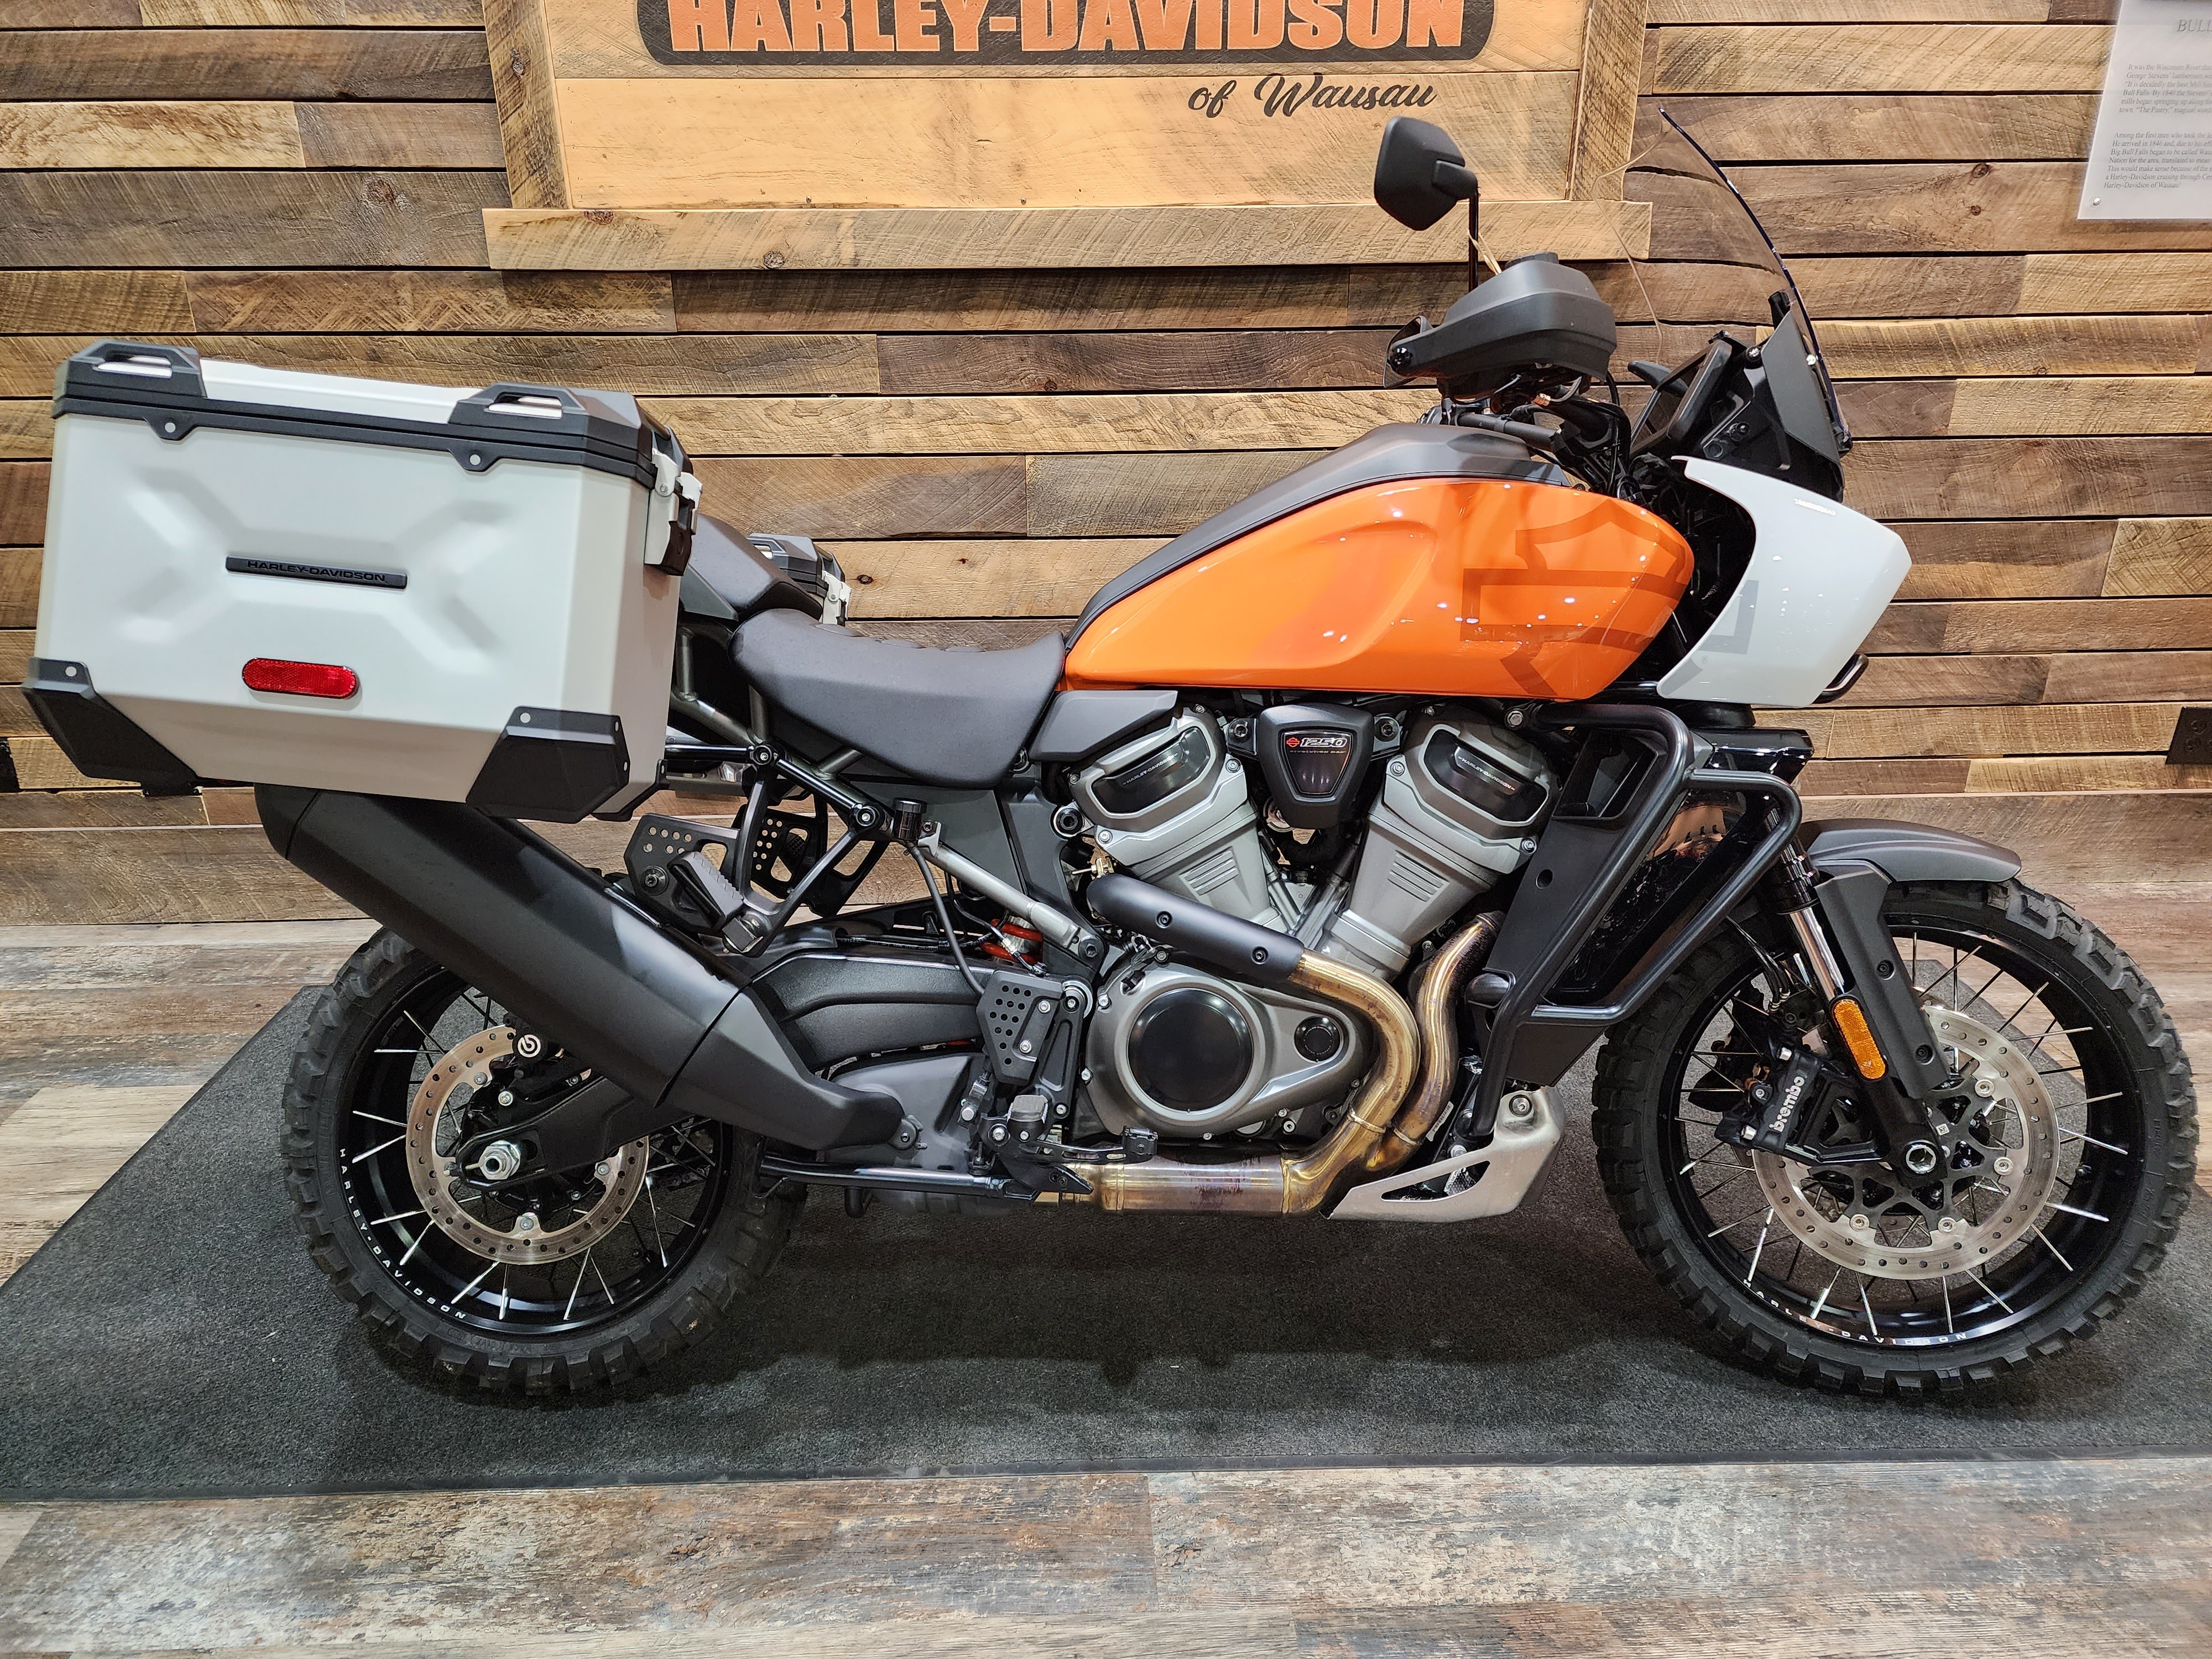 2021 Harley-Davidson Adventure Touring Pan America 1250 Special at Bull Falls Harley-Davidson